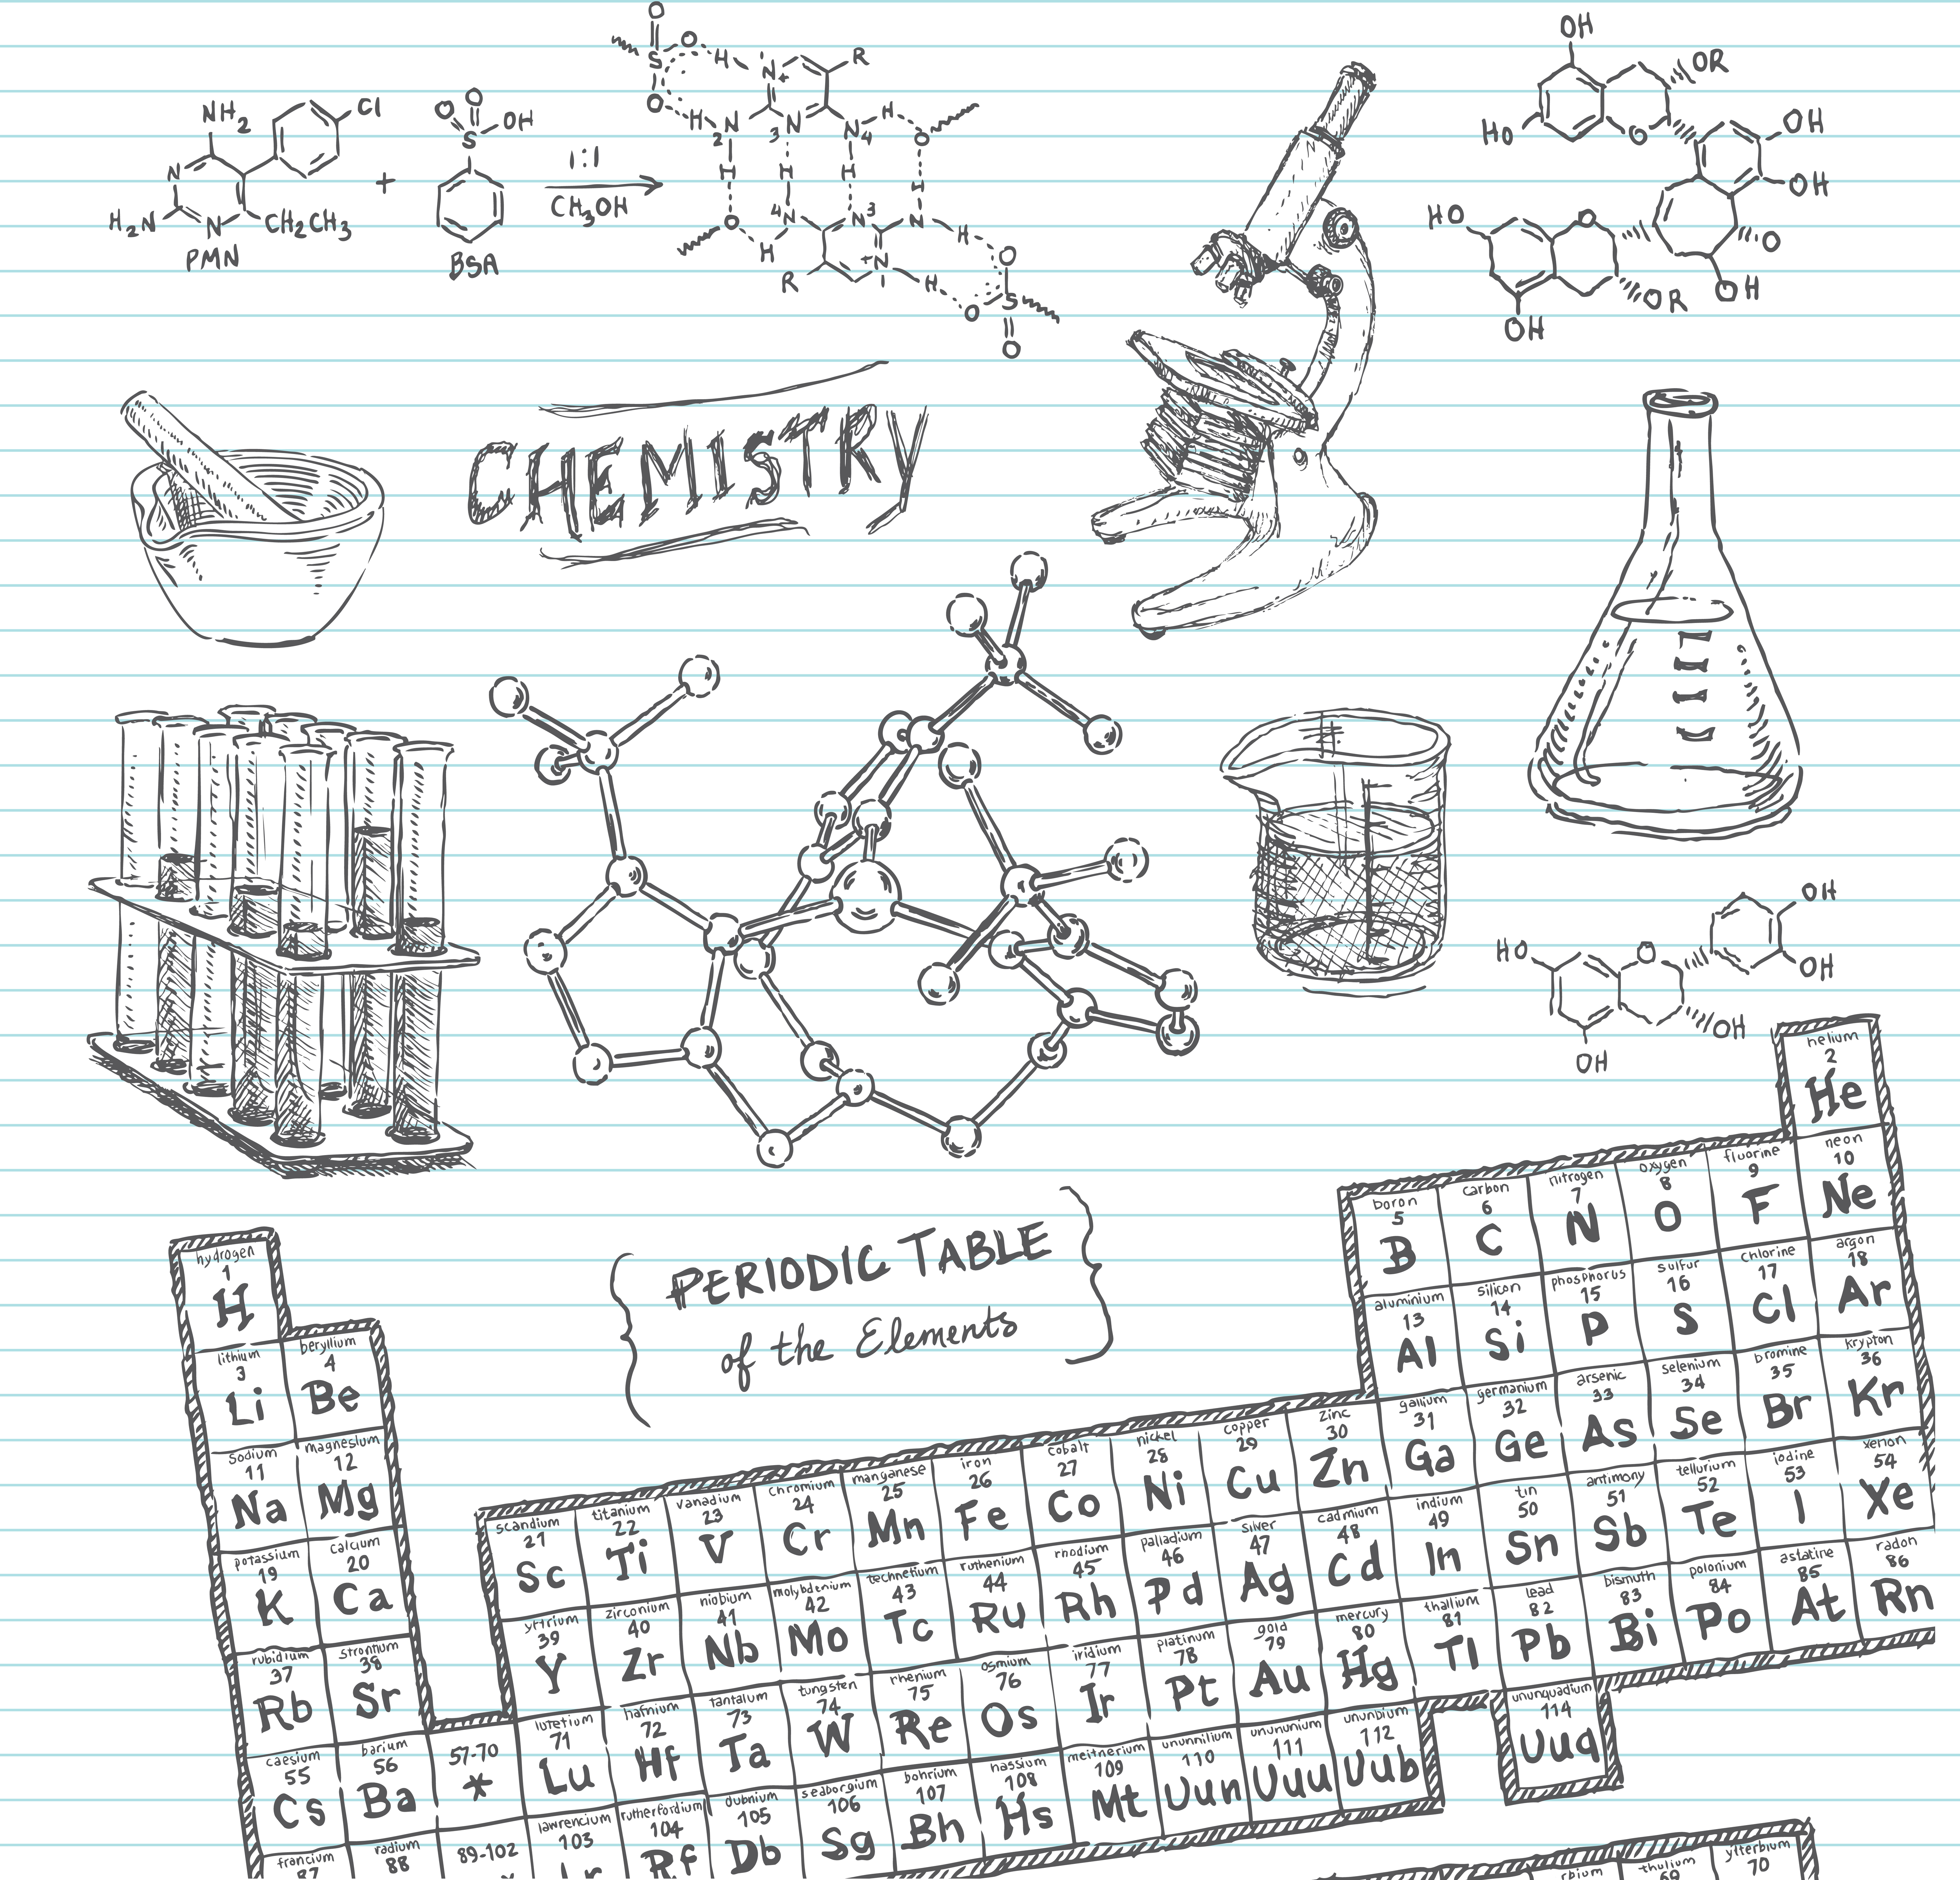 SMU Chemistry Undergraduate Program - Dedman College - SMU